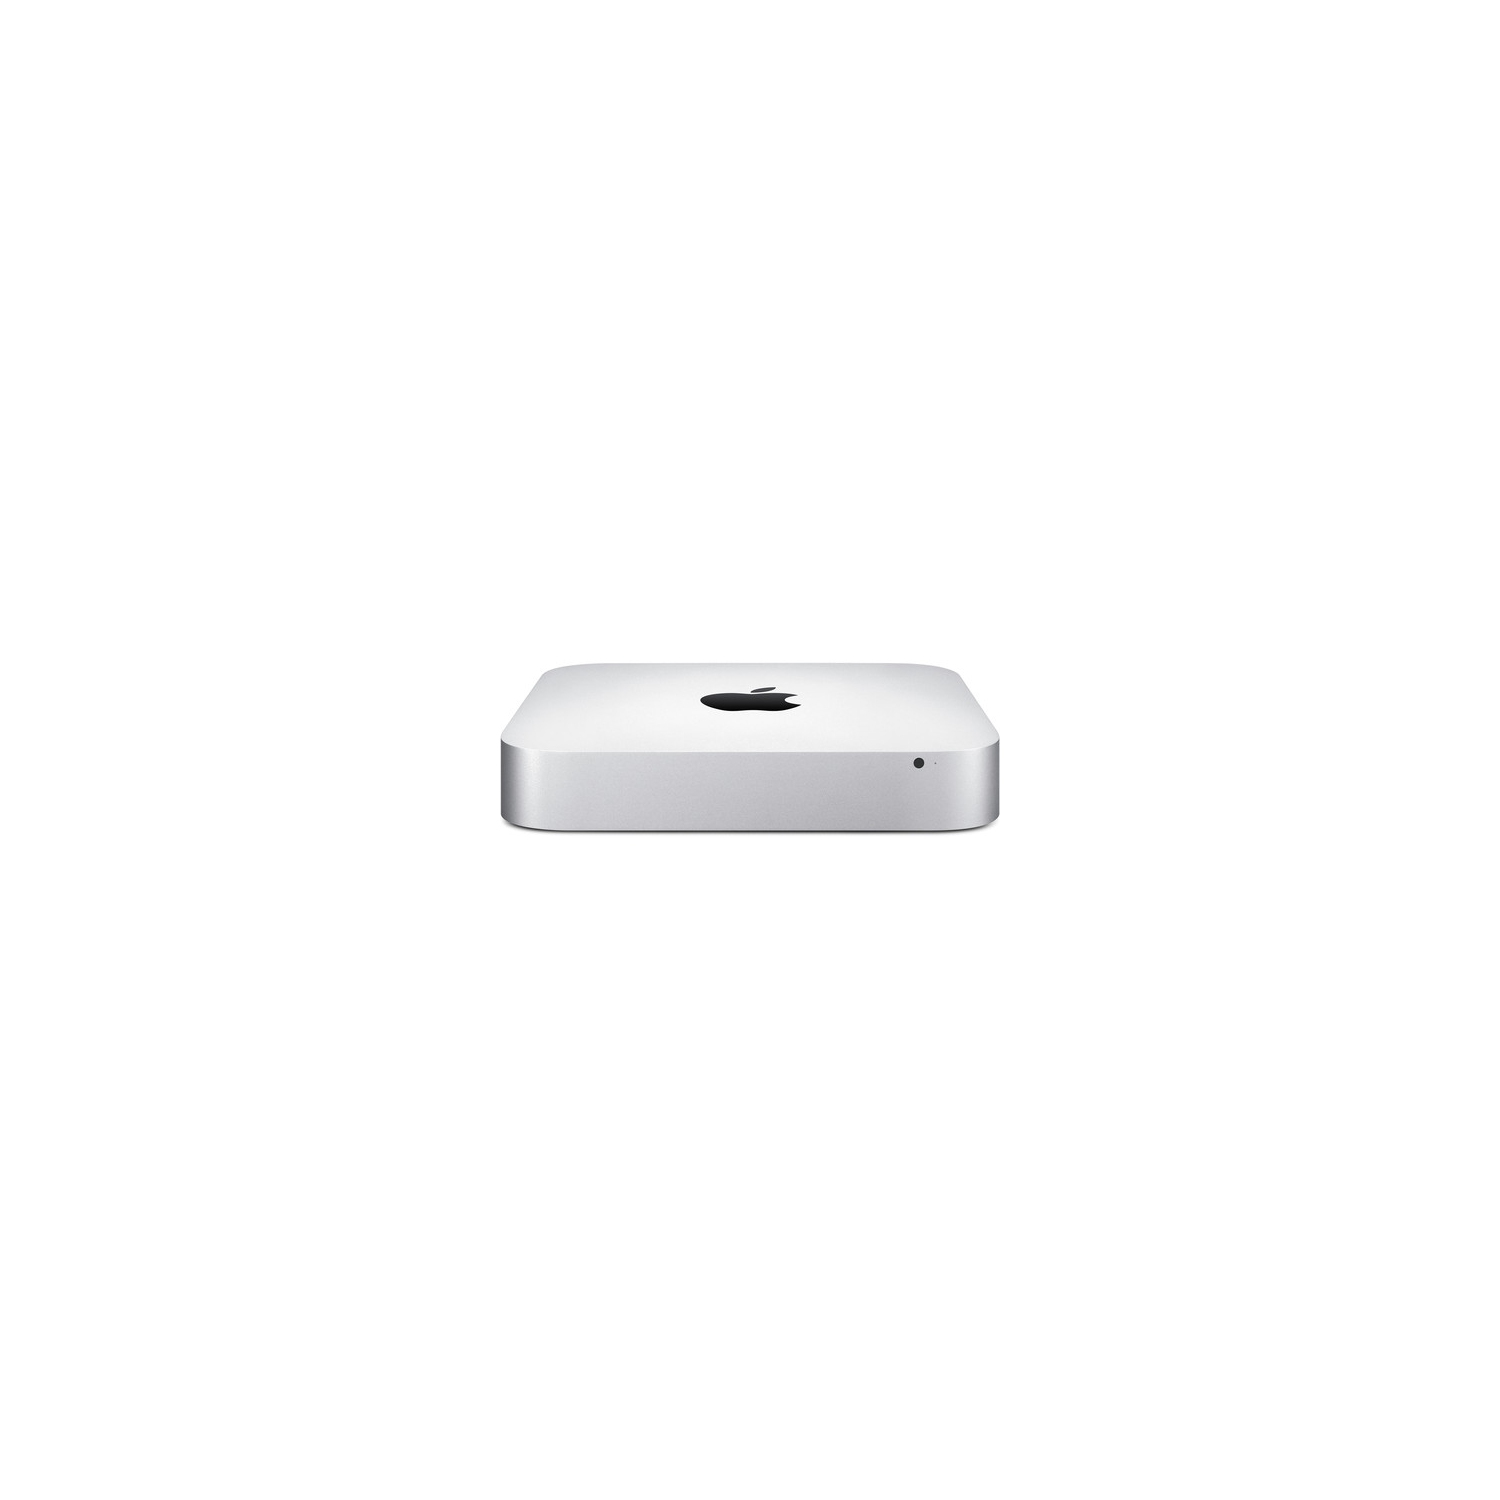 Refurbished (Good) - Apple Mac Mini (Late 2014) i5 1.4 Ghz 4GB RAM, 500GB HDD, macOS Monterey